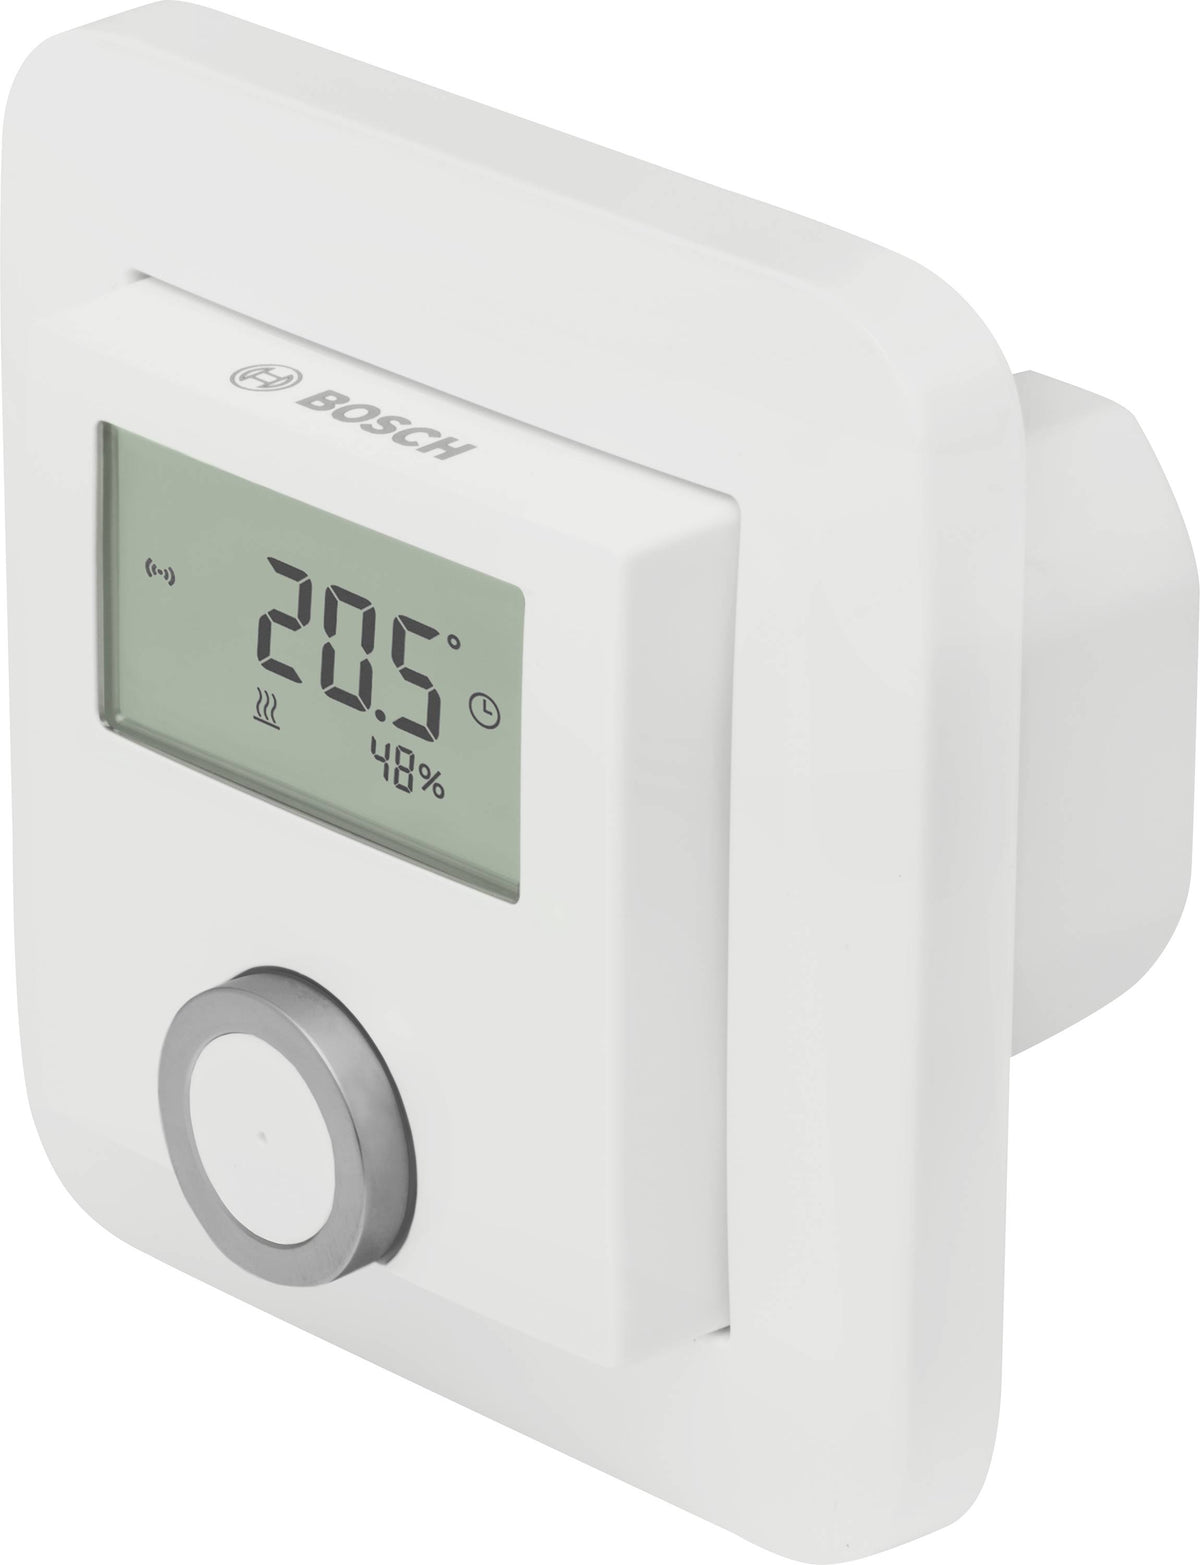 Bosch Smart Home - Thermostat - wireless - 868.3 MHz, 869.525 MHz